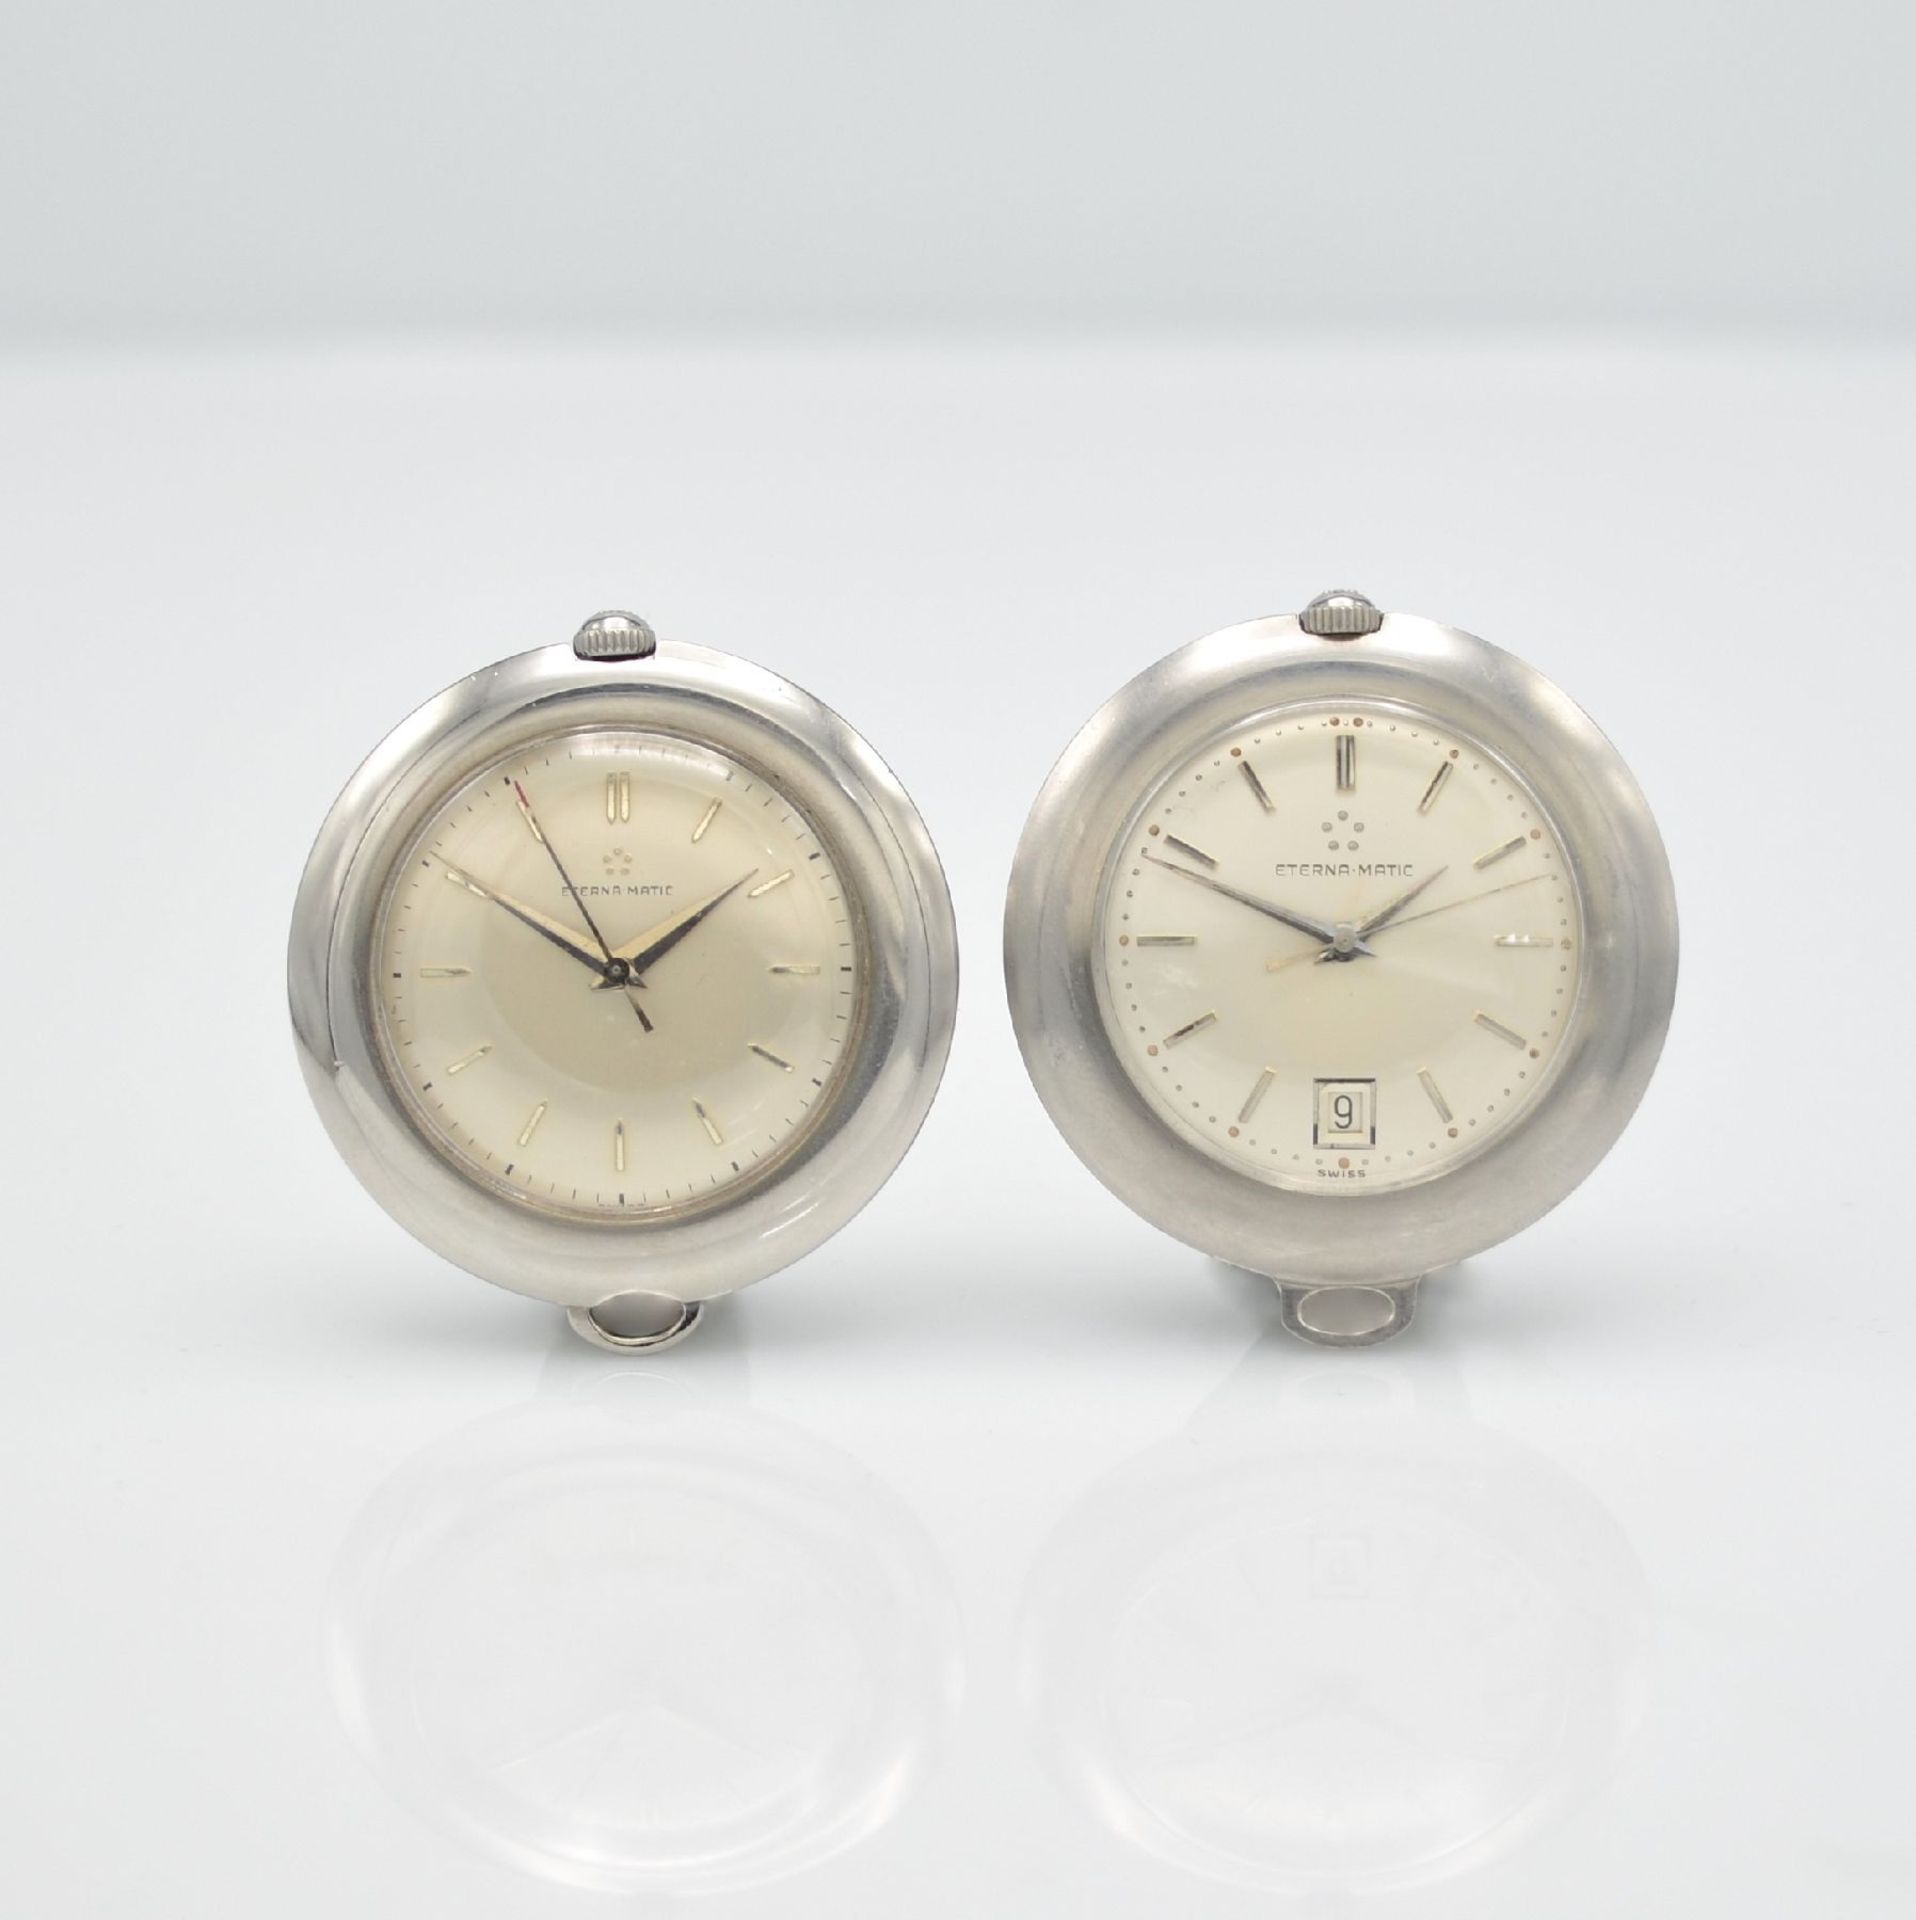 ETERNA-MATIC Golfer 2 steel pocket watches, Switzerland around 1960, self winding, screwed down & on